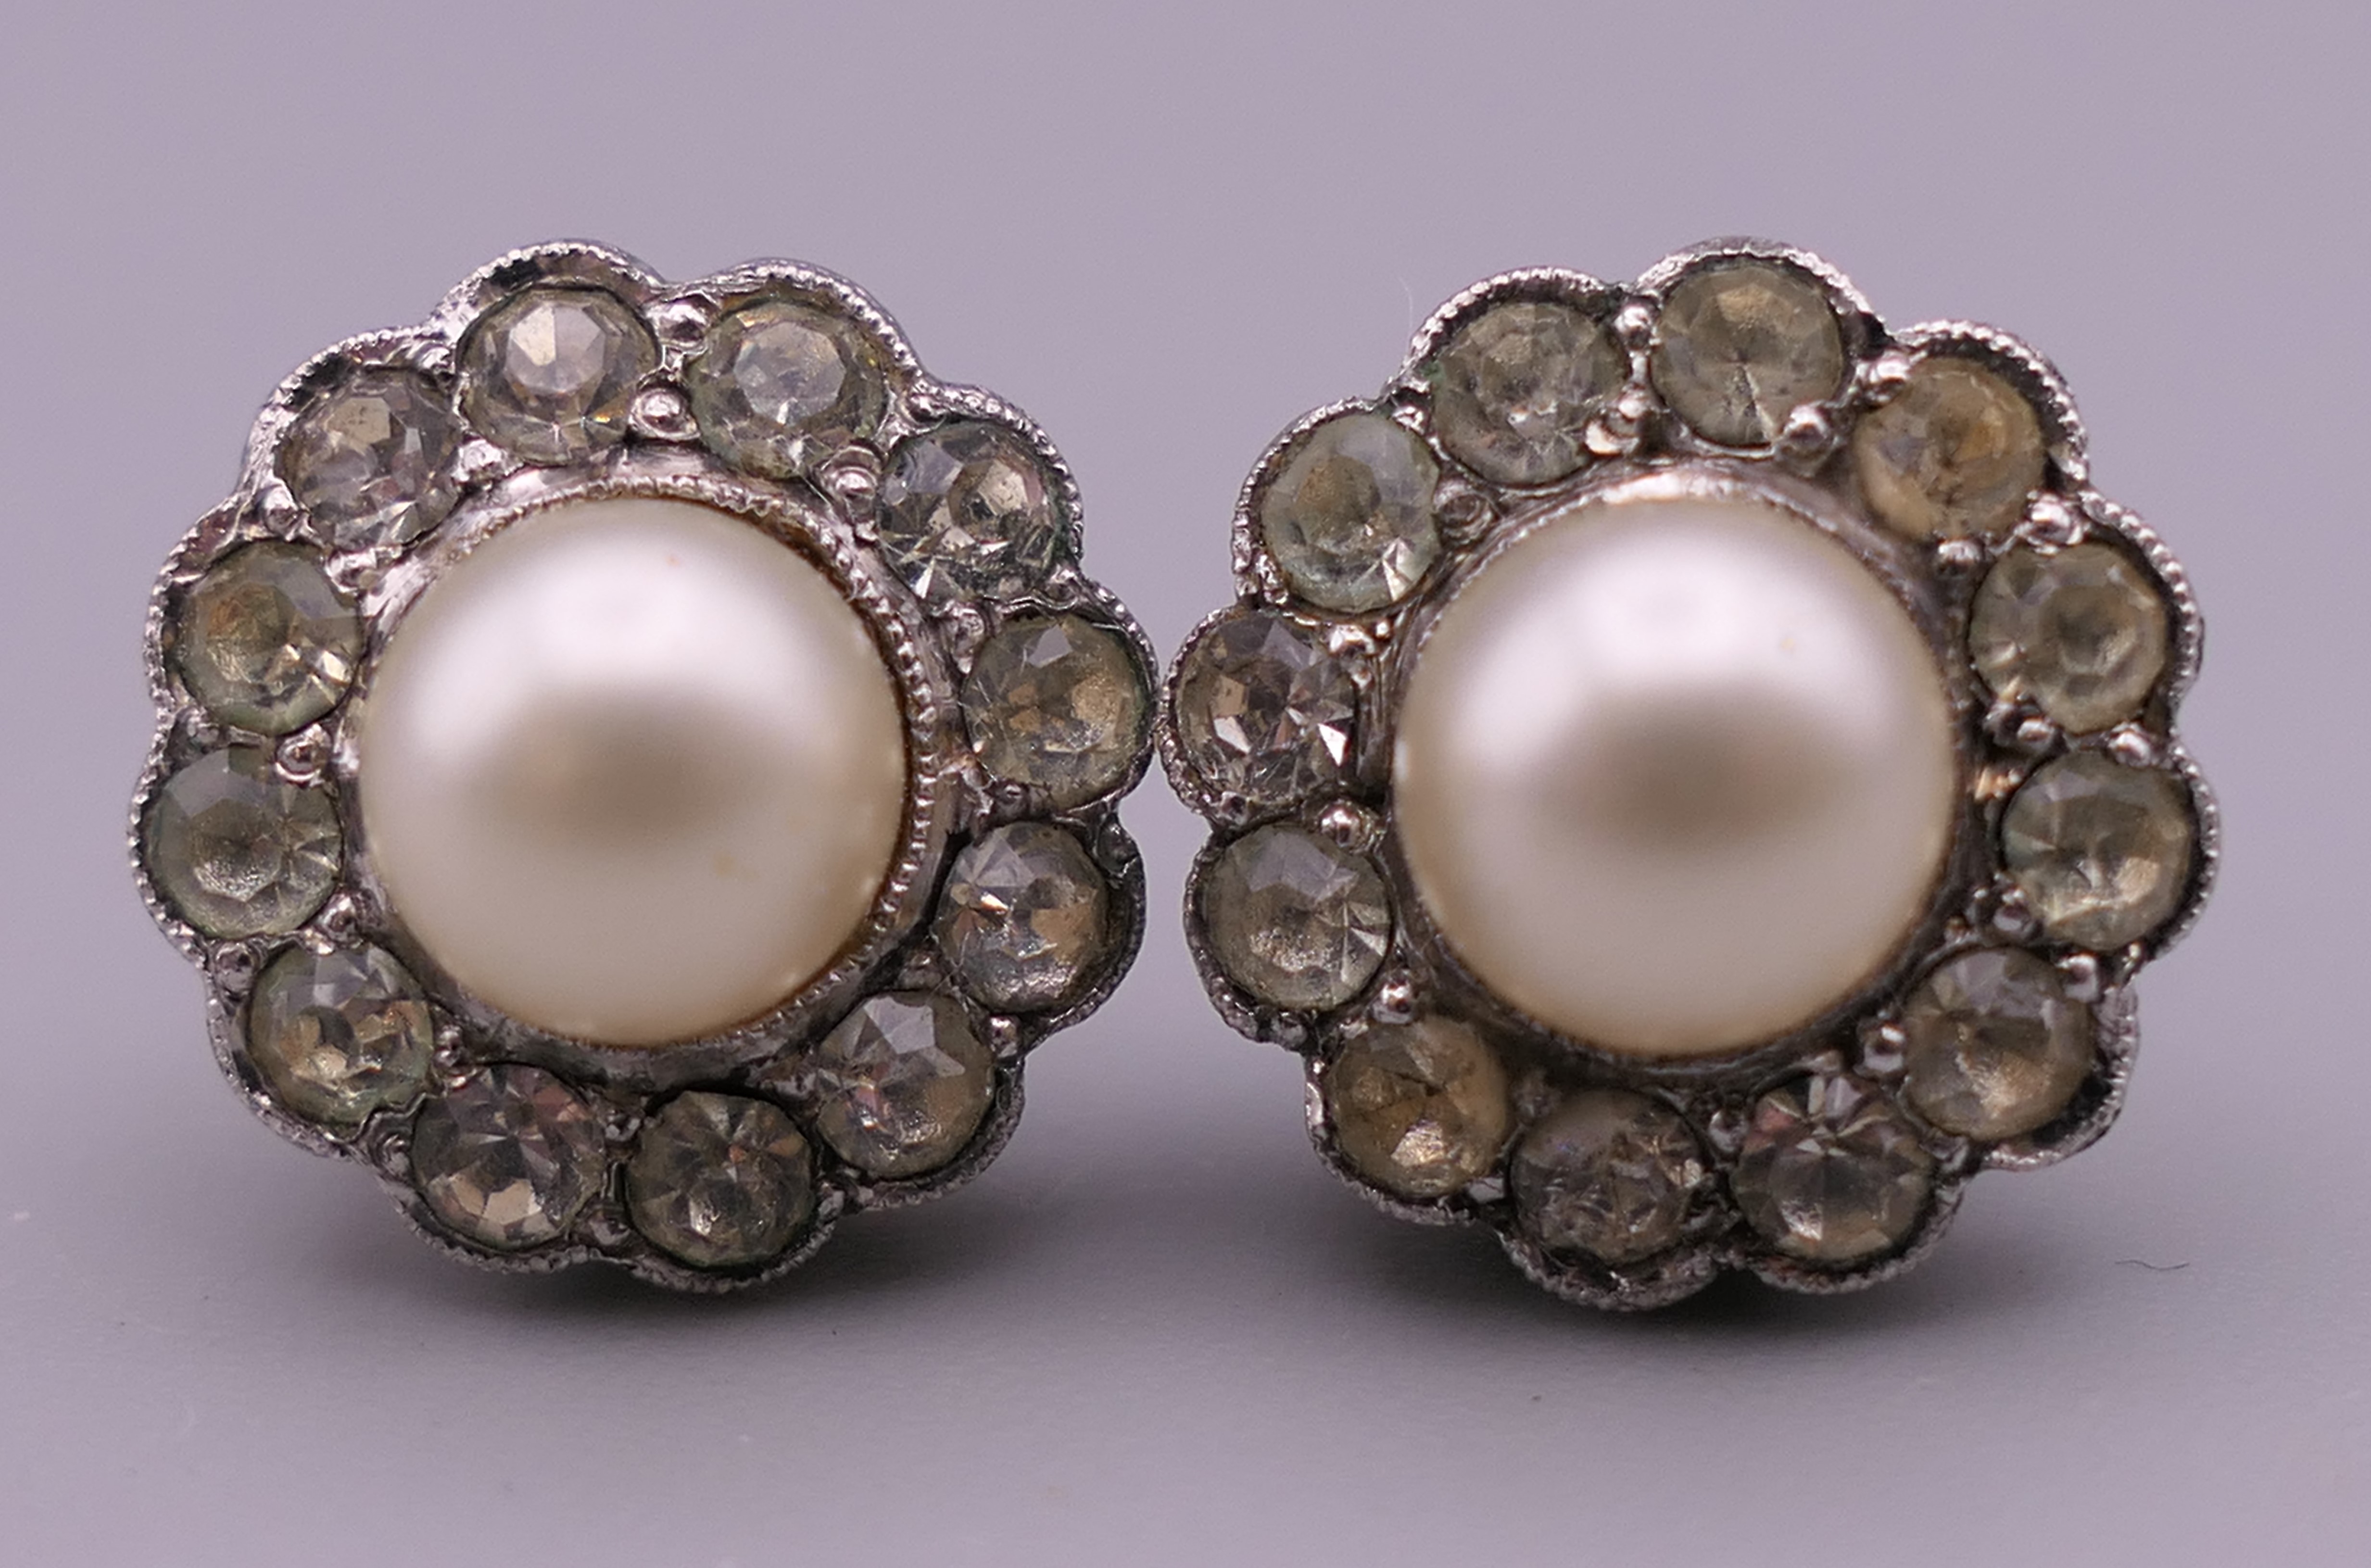 A pair of Ciro of London 9 ct gold mounted earrings. 1 cm diameter.